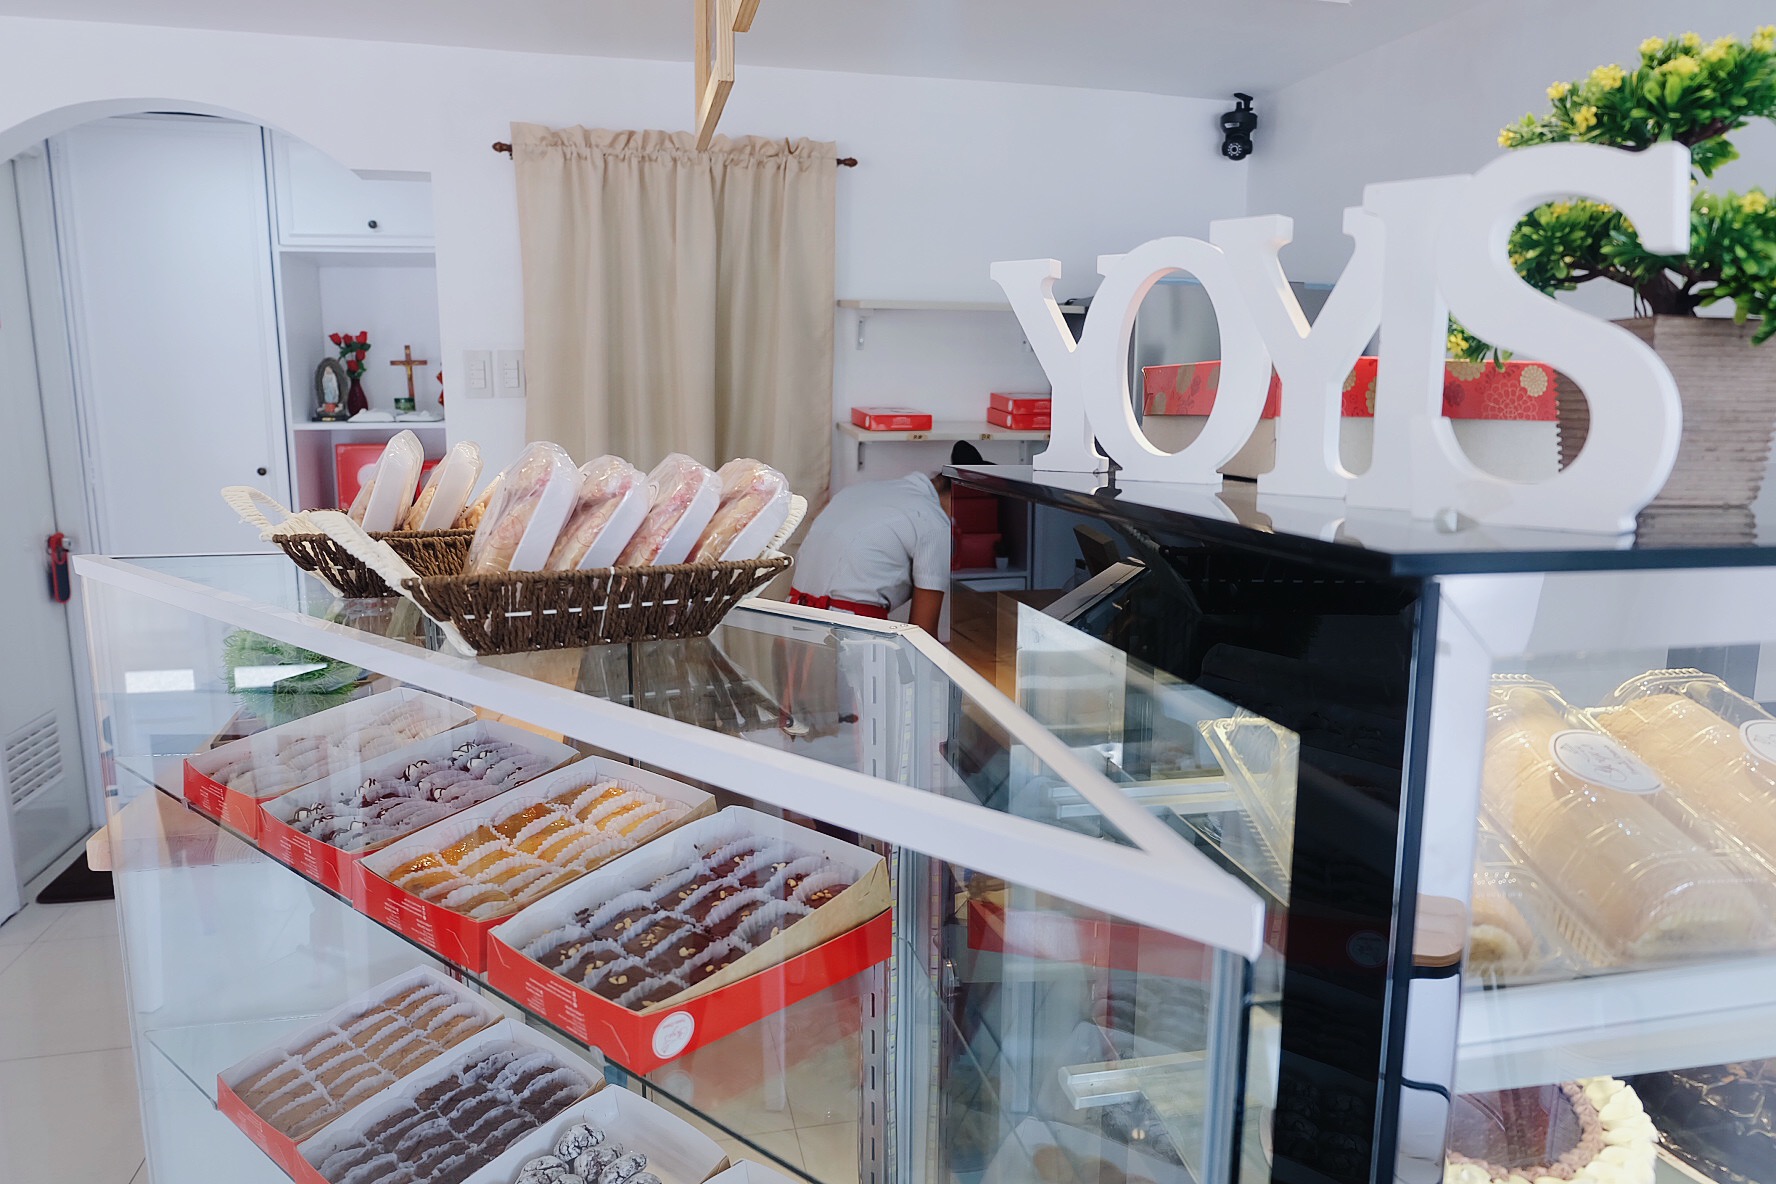 yoyis pastries and desserts - iamkimcharlie